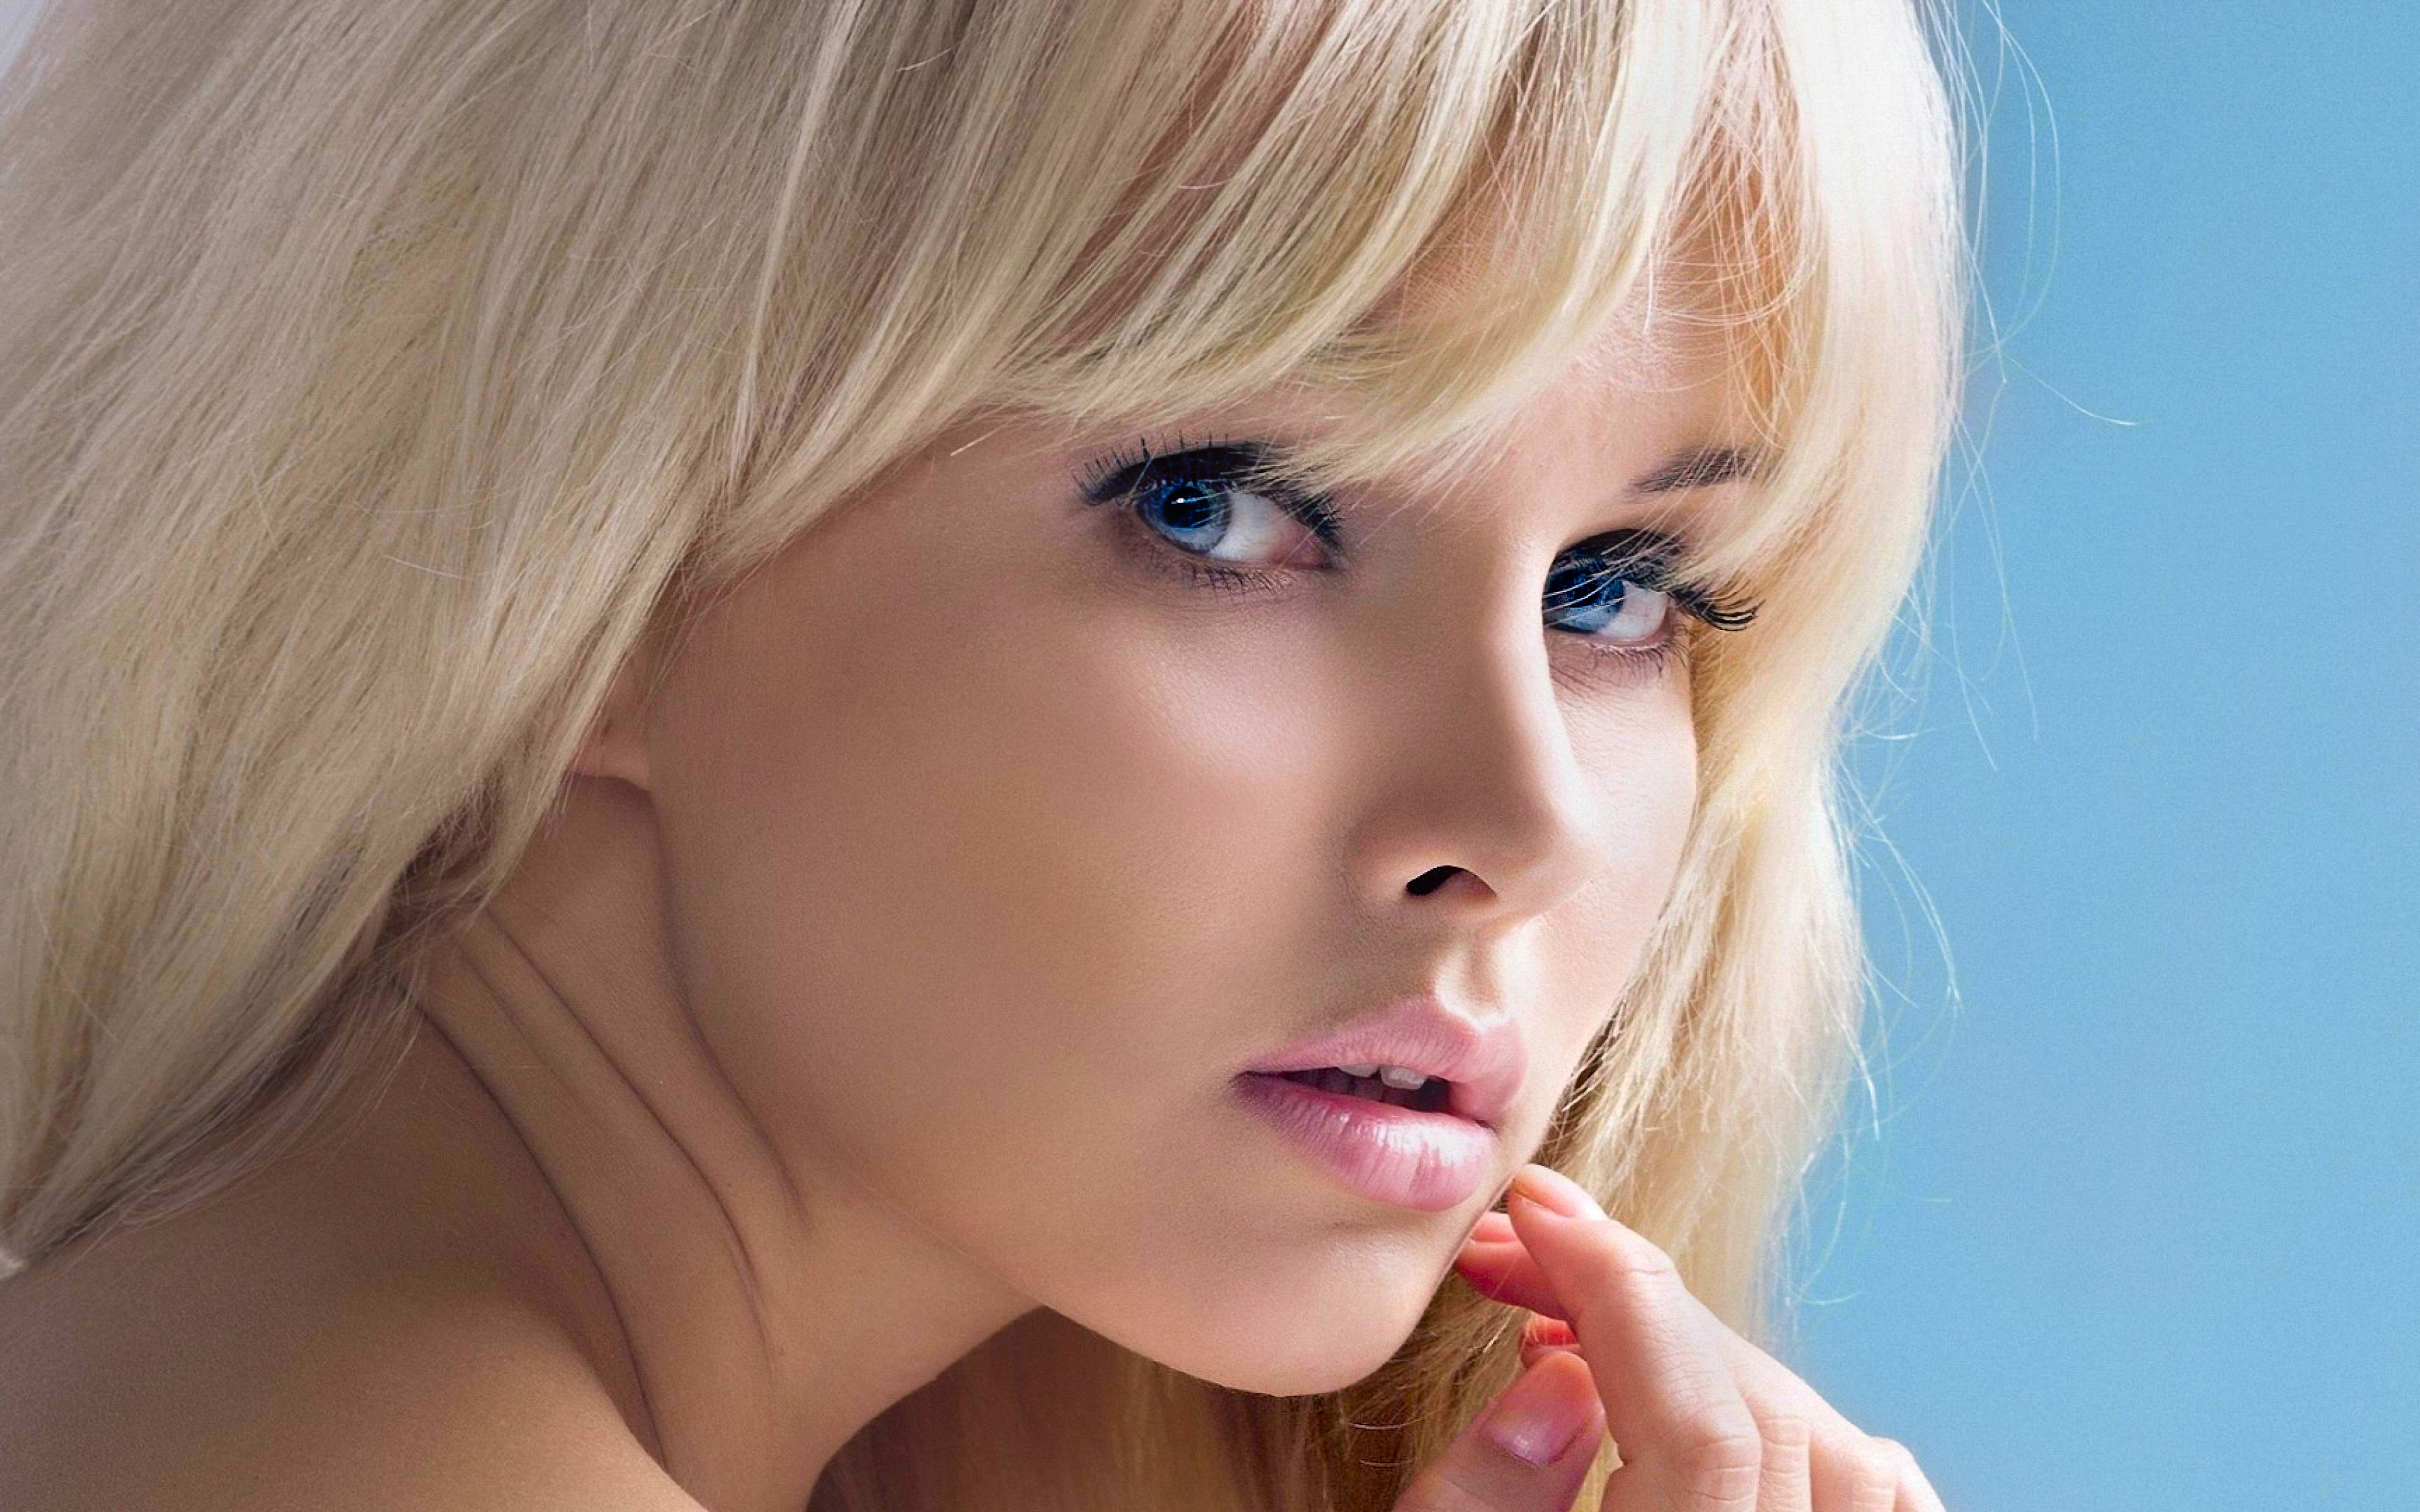 android model, face, beautiful, blonde, women, blue eyes, kiera hudson